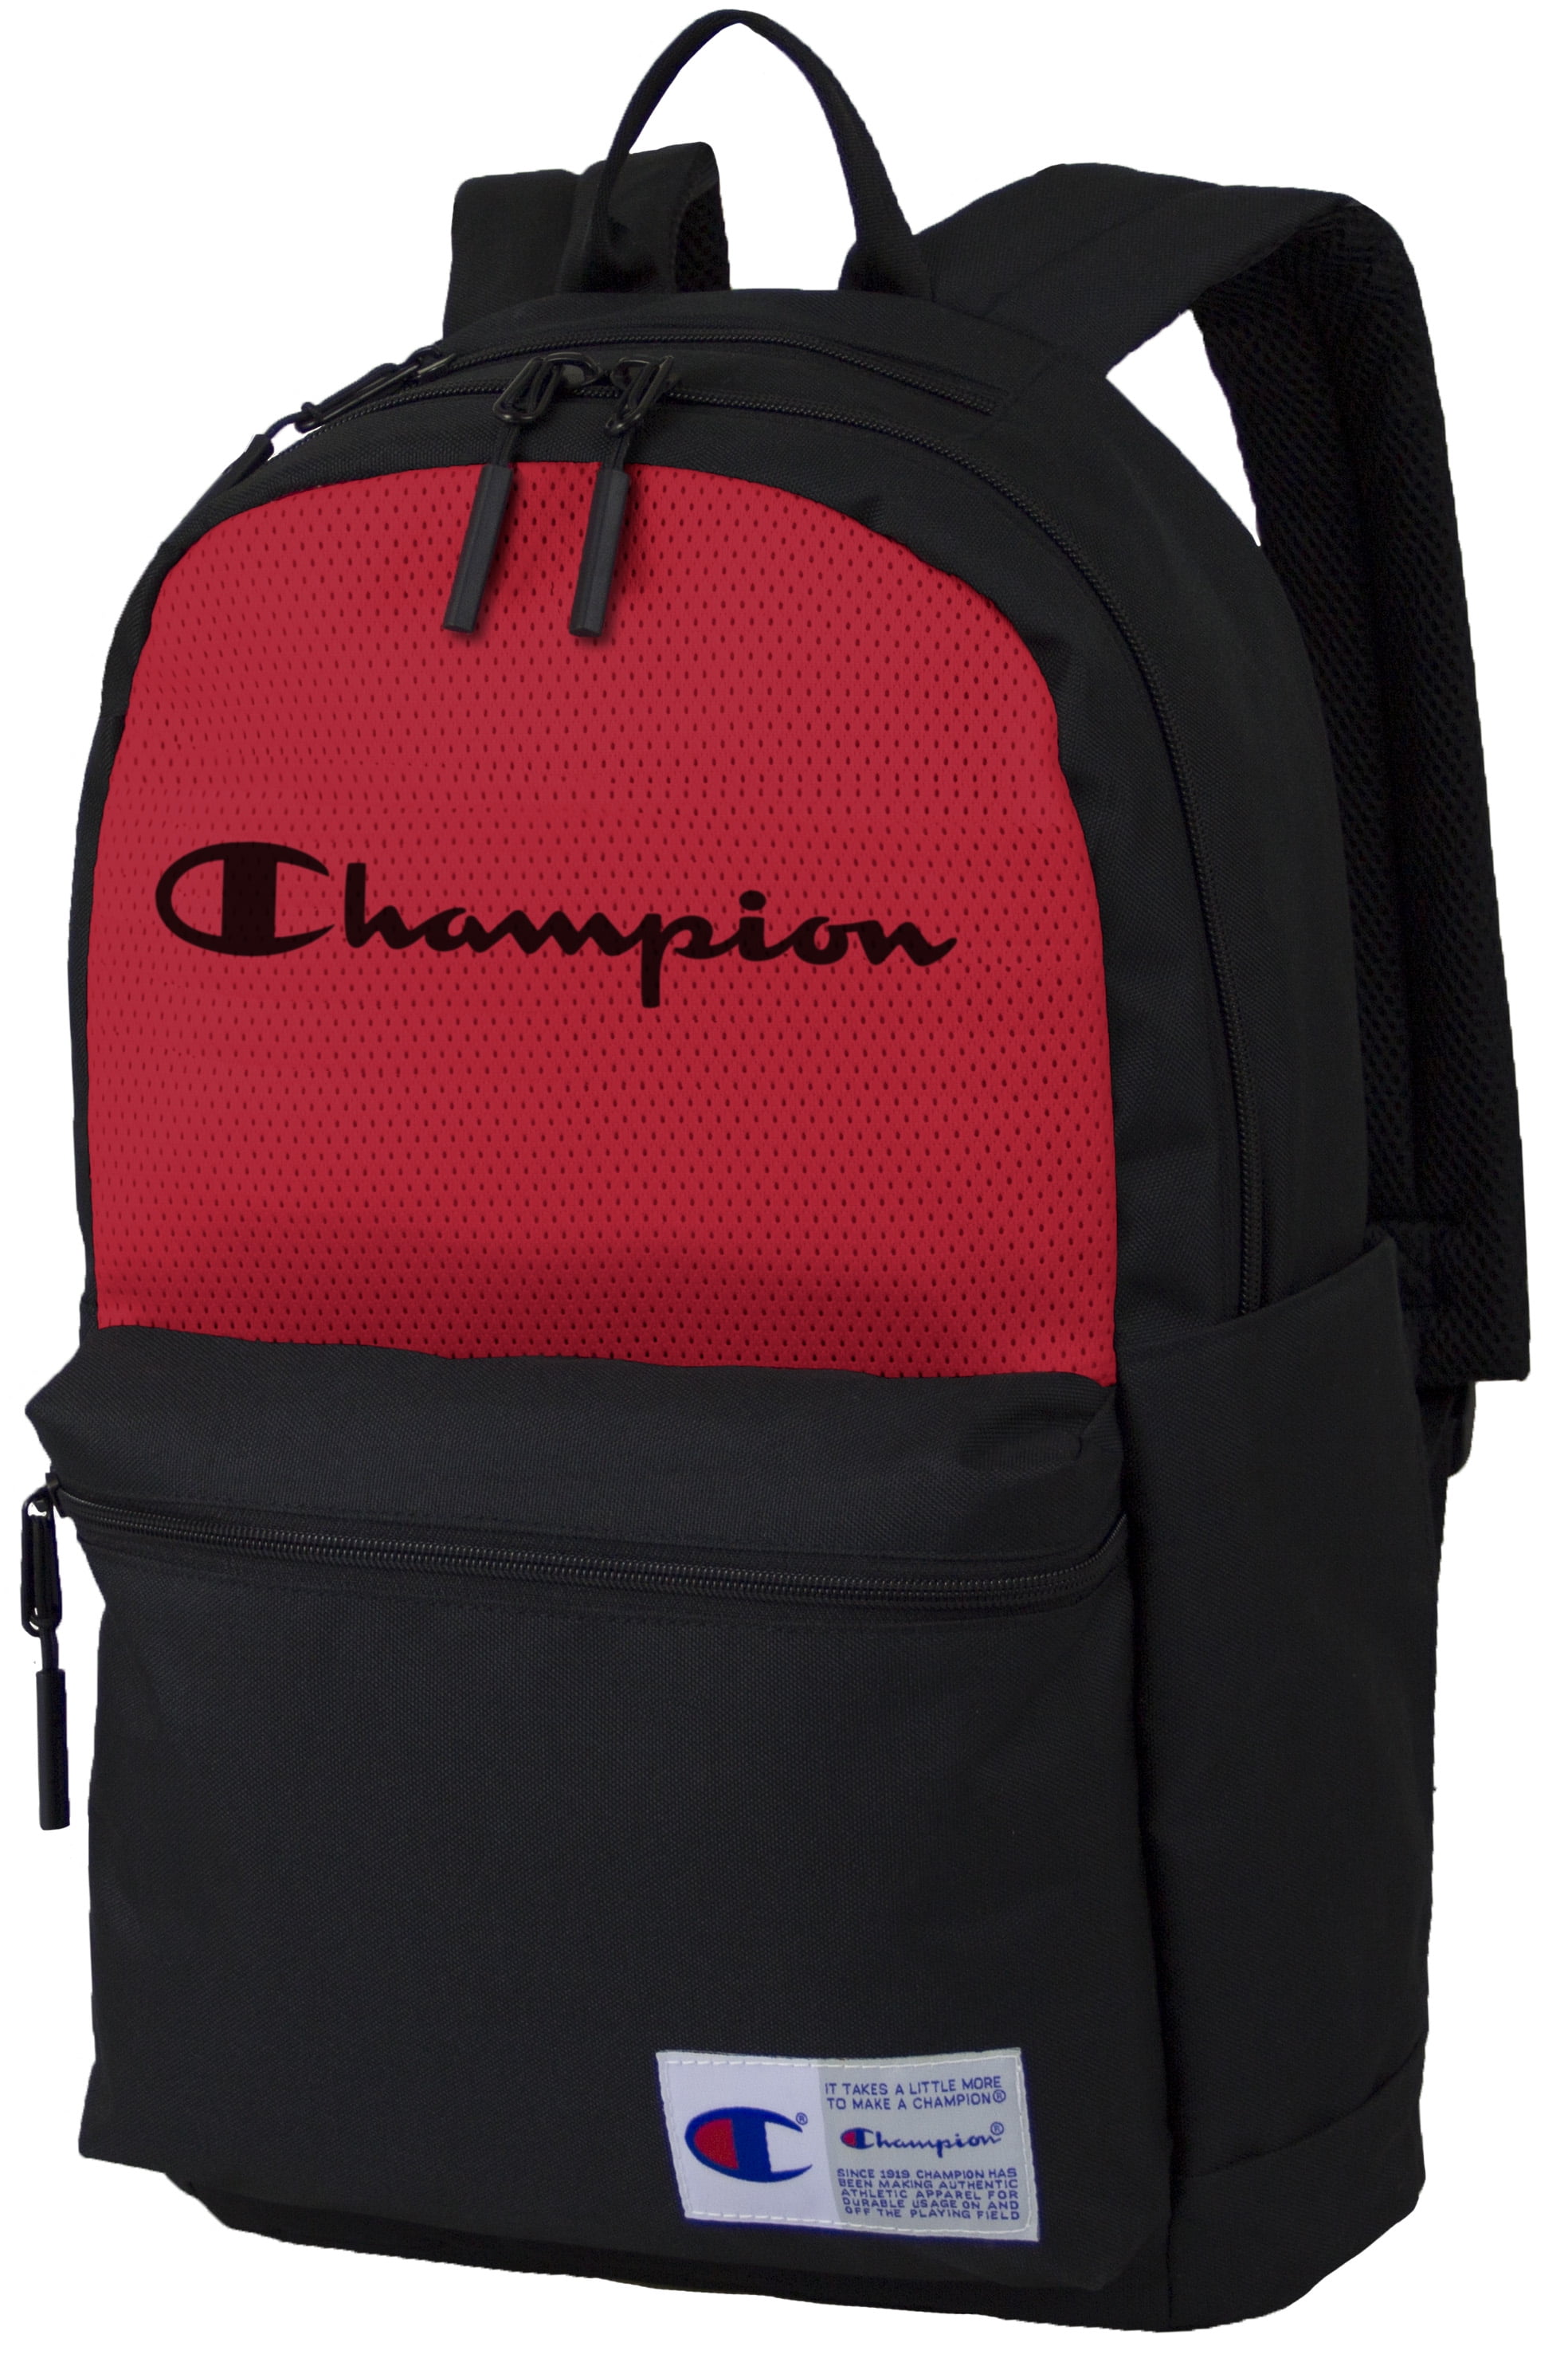 Champion Mesh Block Backpack, Black/Red - Walmart.com